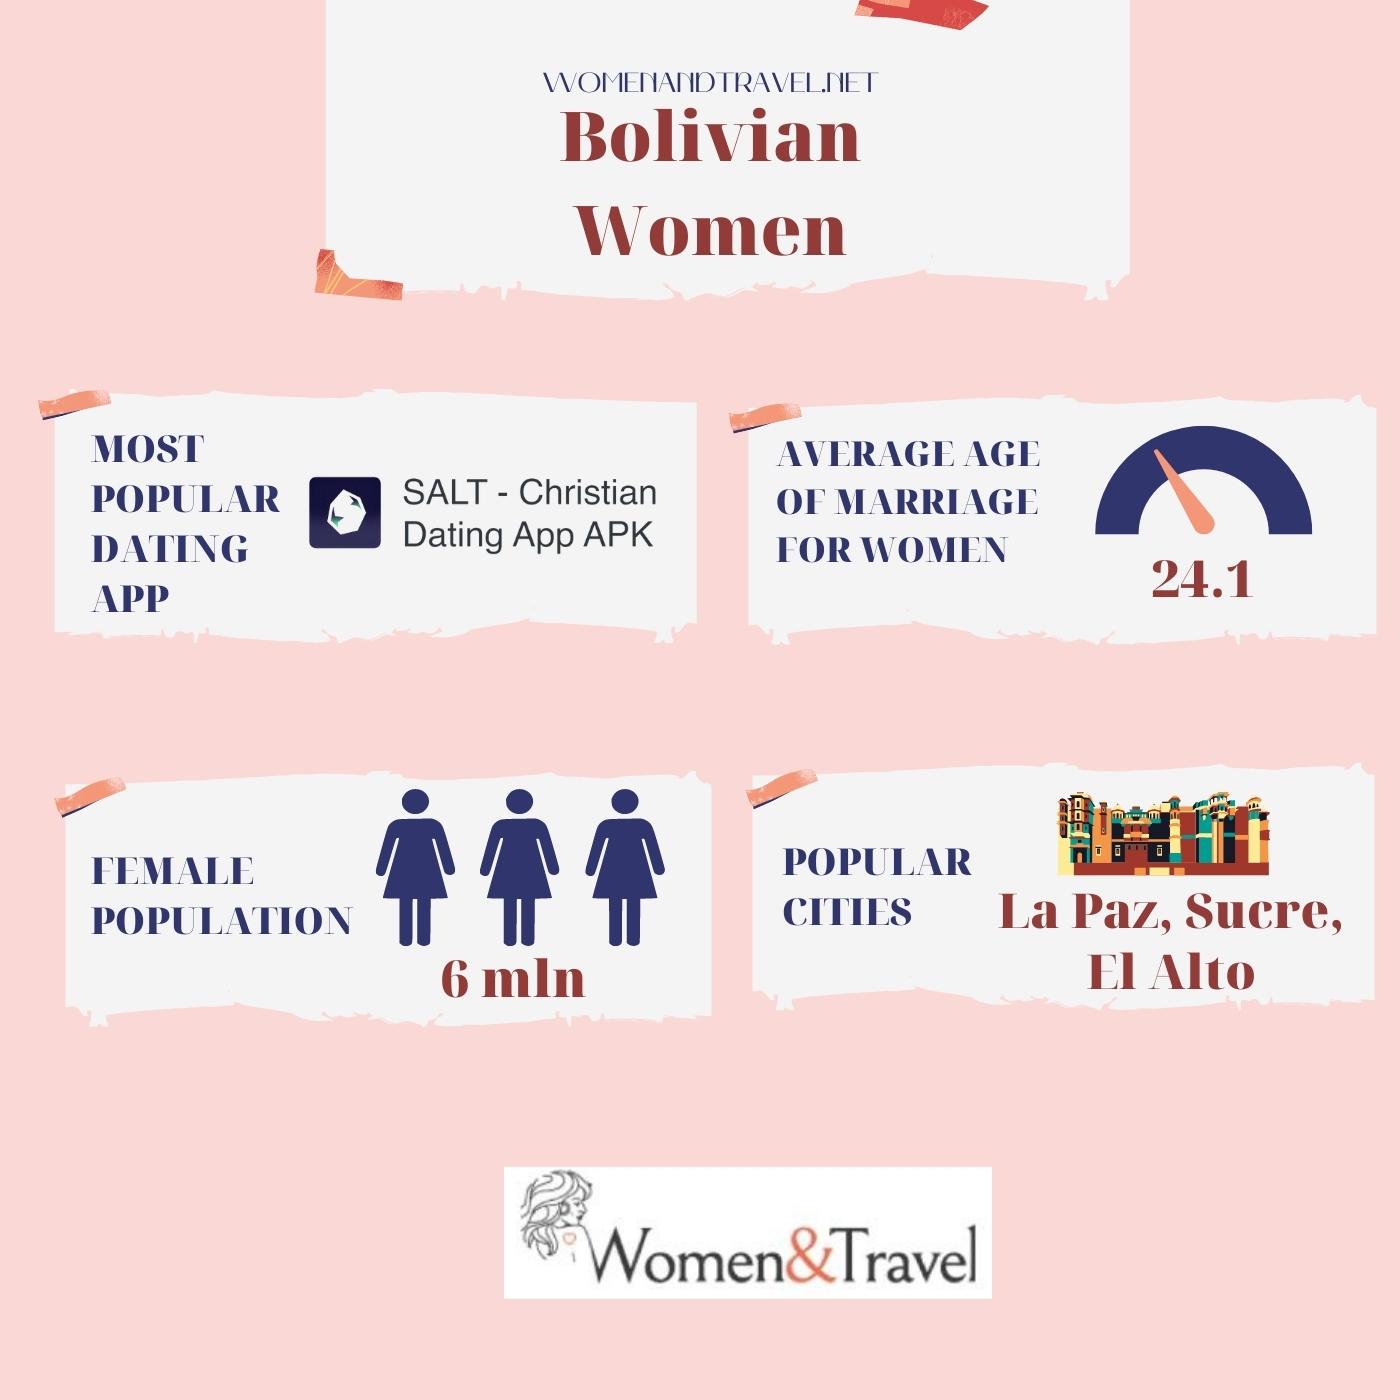 Bolivian Women infographic